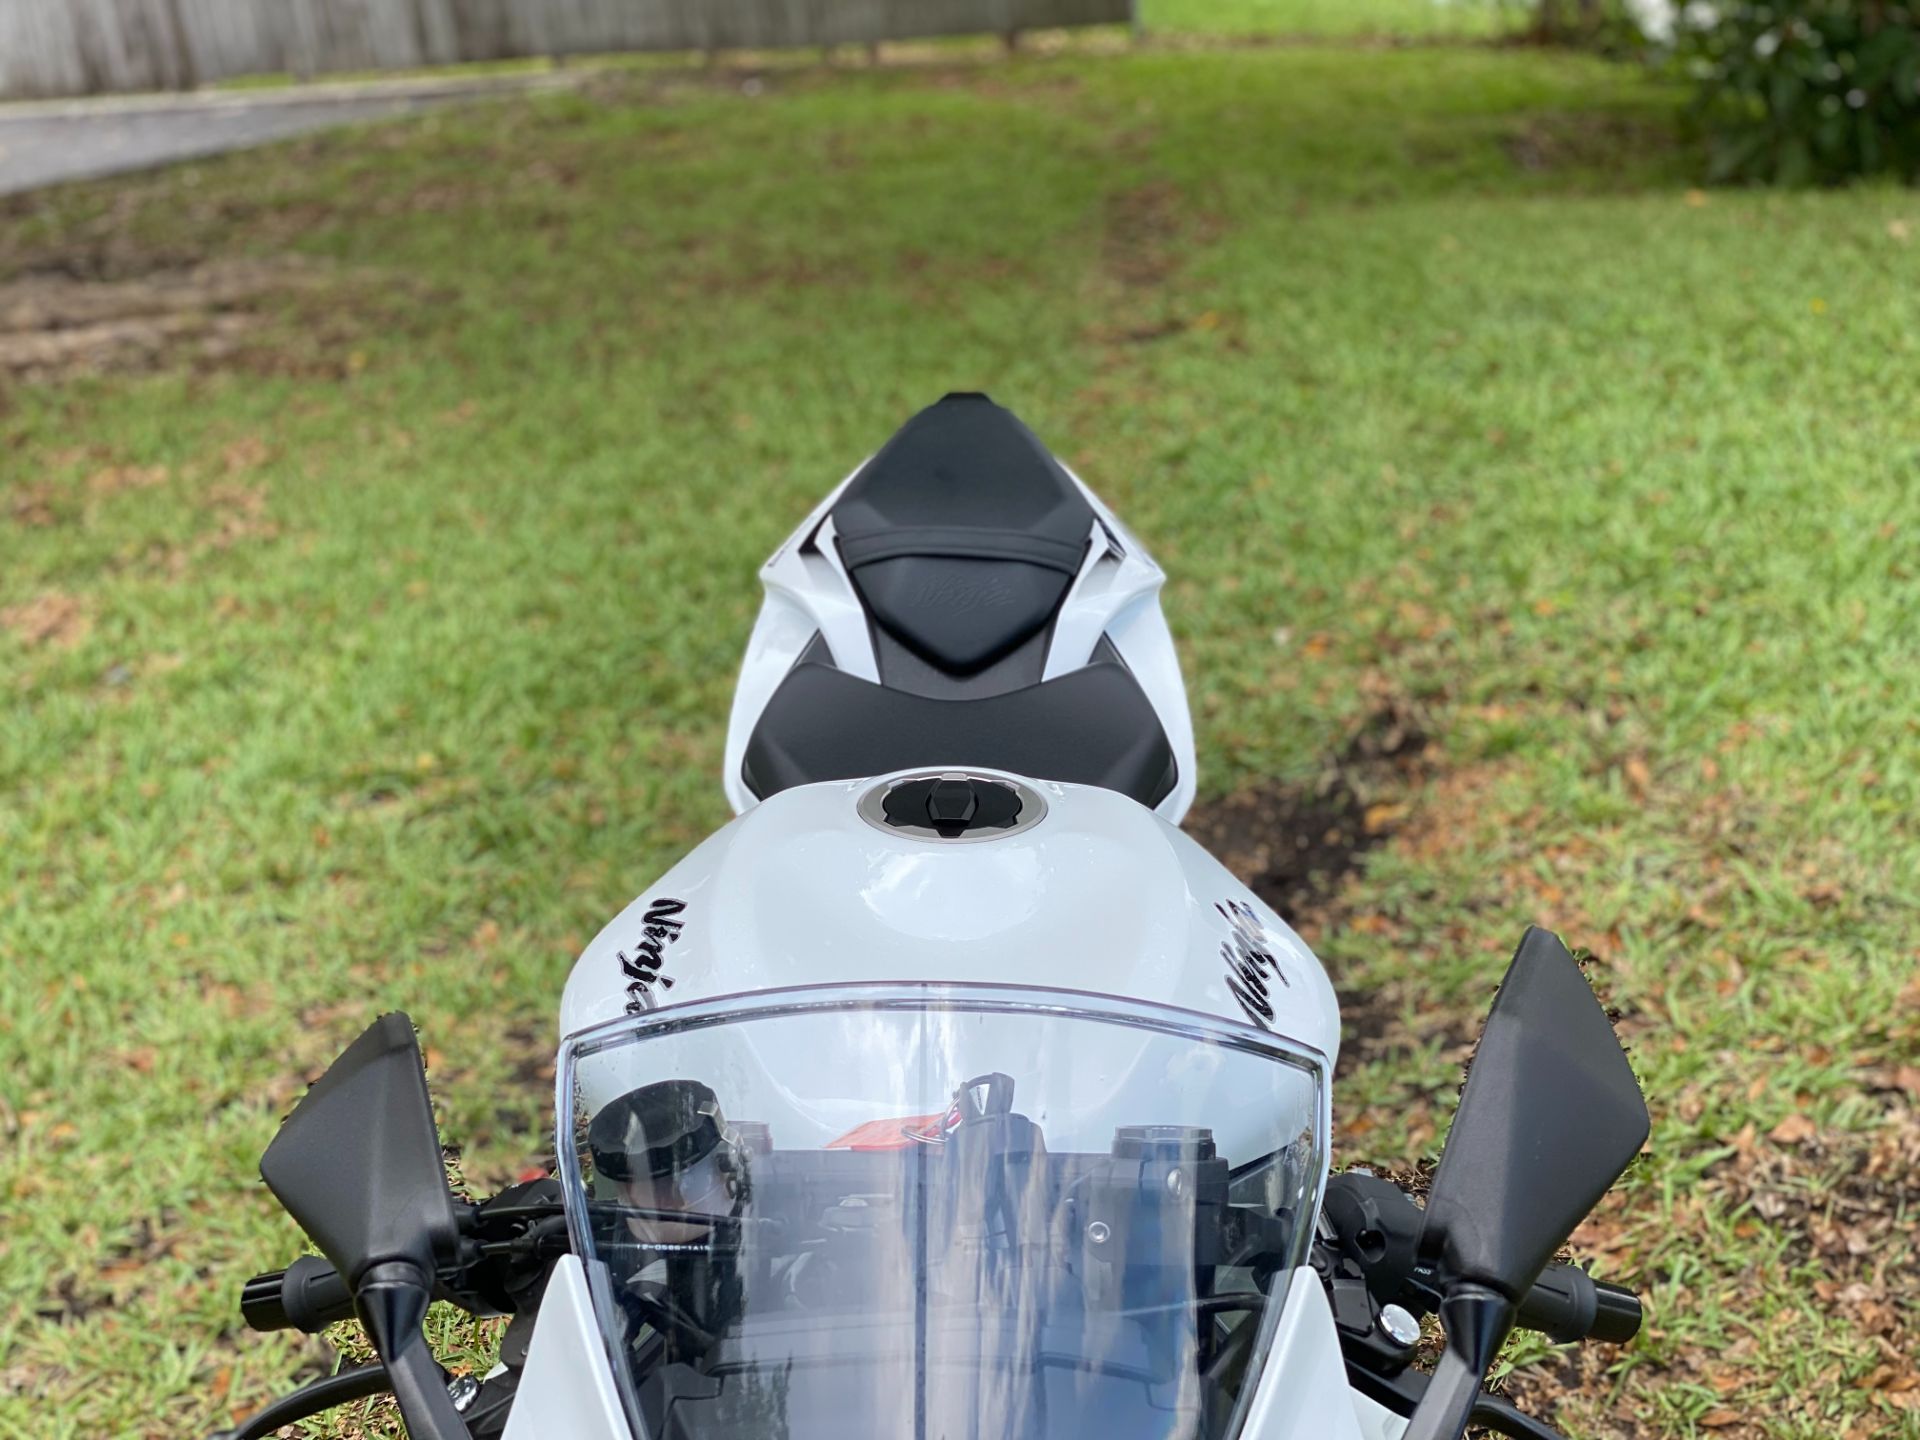 2021 Kawasaki Ninja ZX-6R in North Miami Beach, Florida - Photo 9